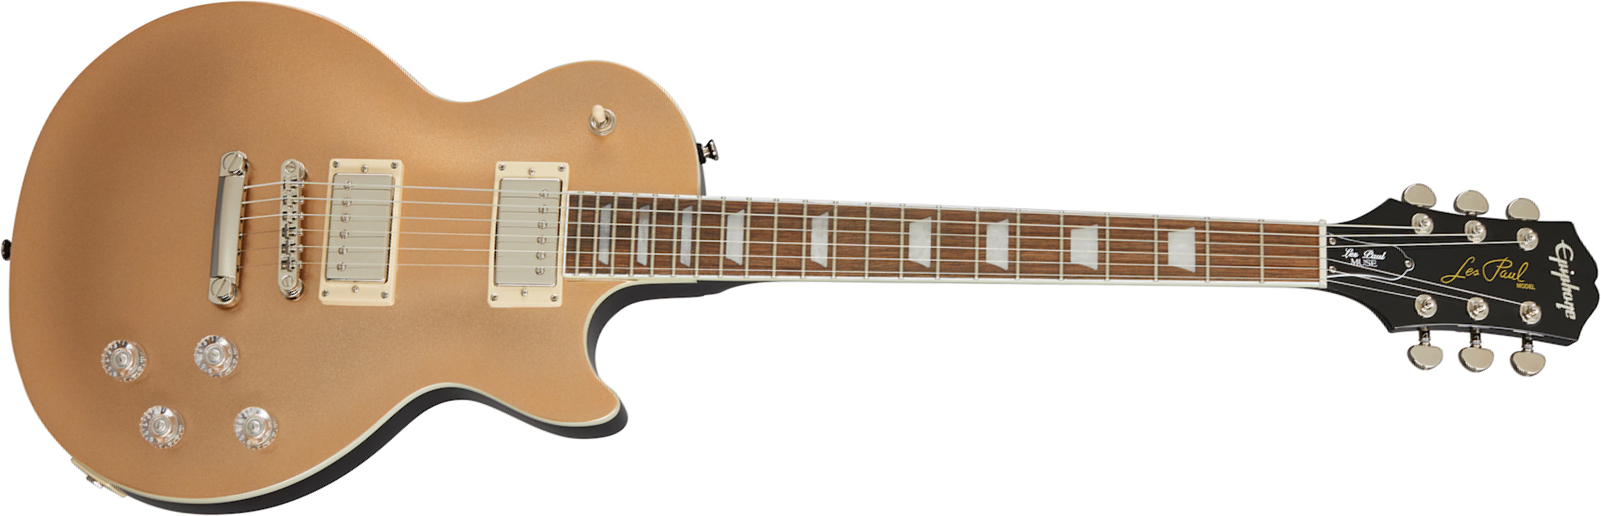 Epiphone Les Paul Muse Modern 2h Ht Lau - Smoked Almond Metallic - Single cut electric guitar - Main picture